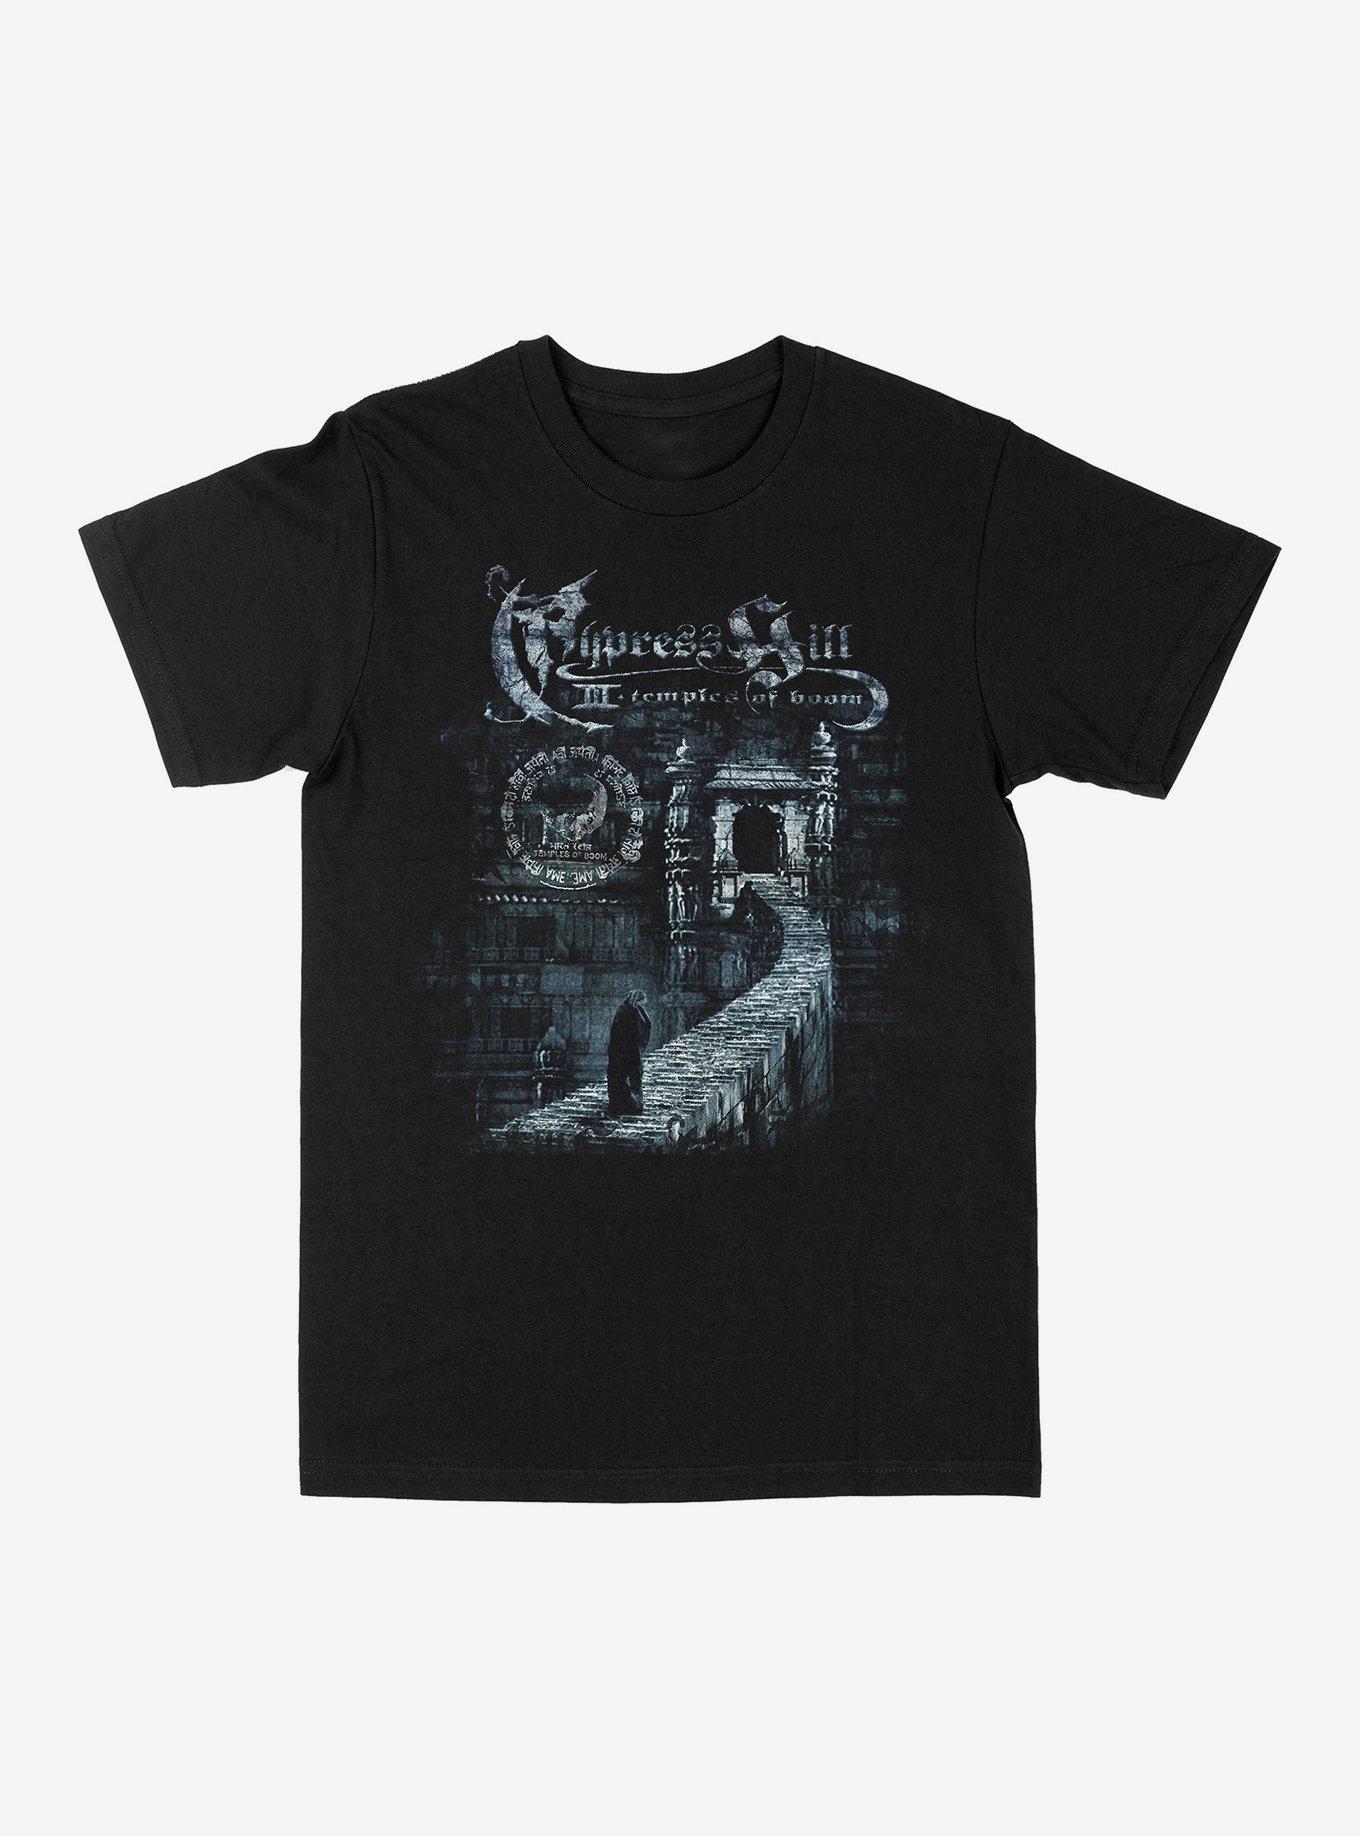 Cypress Hill Iii (Temples Of Boom) Album Cover Boyfriend Fit Girls T-Shirt, BLACK, hi-res